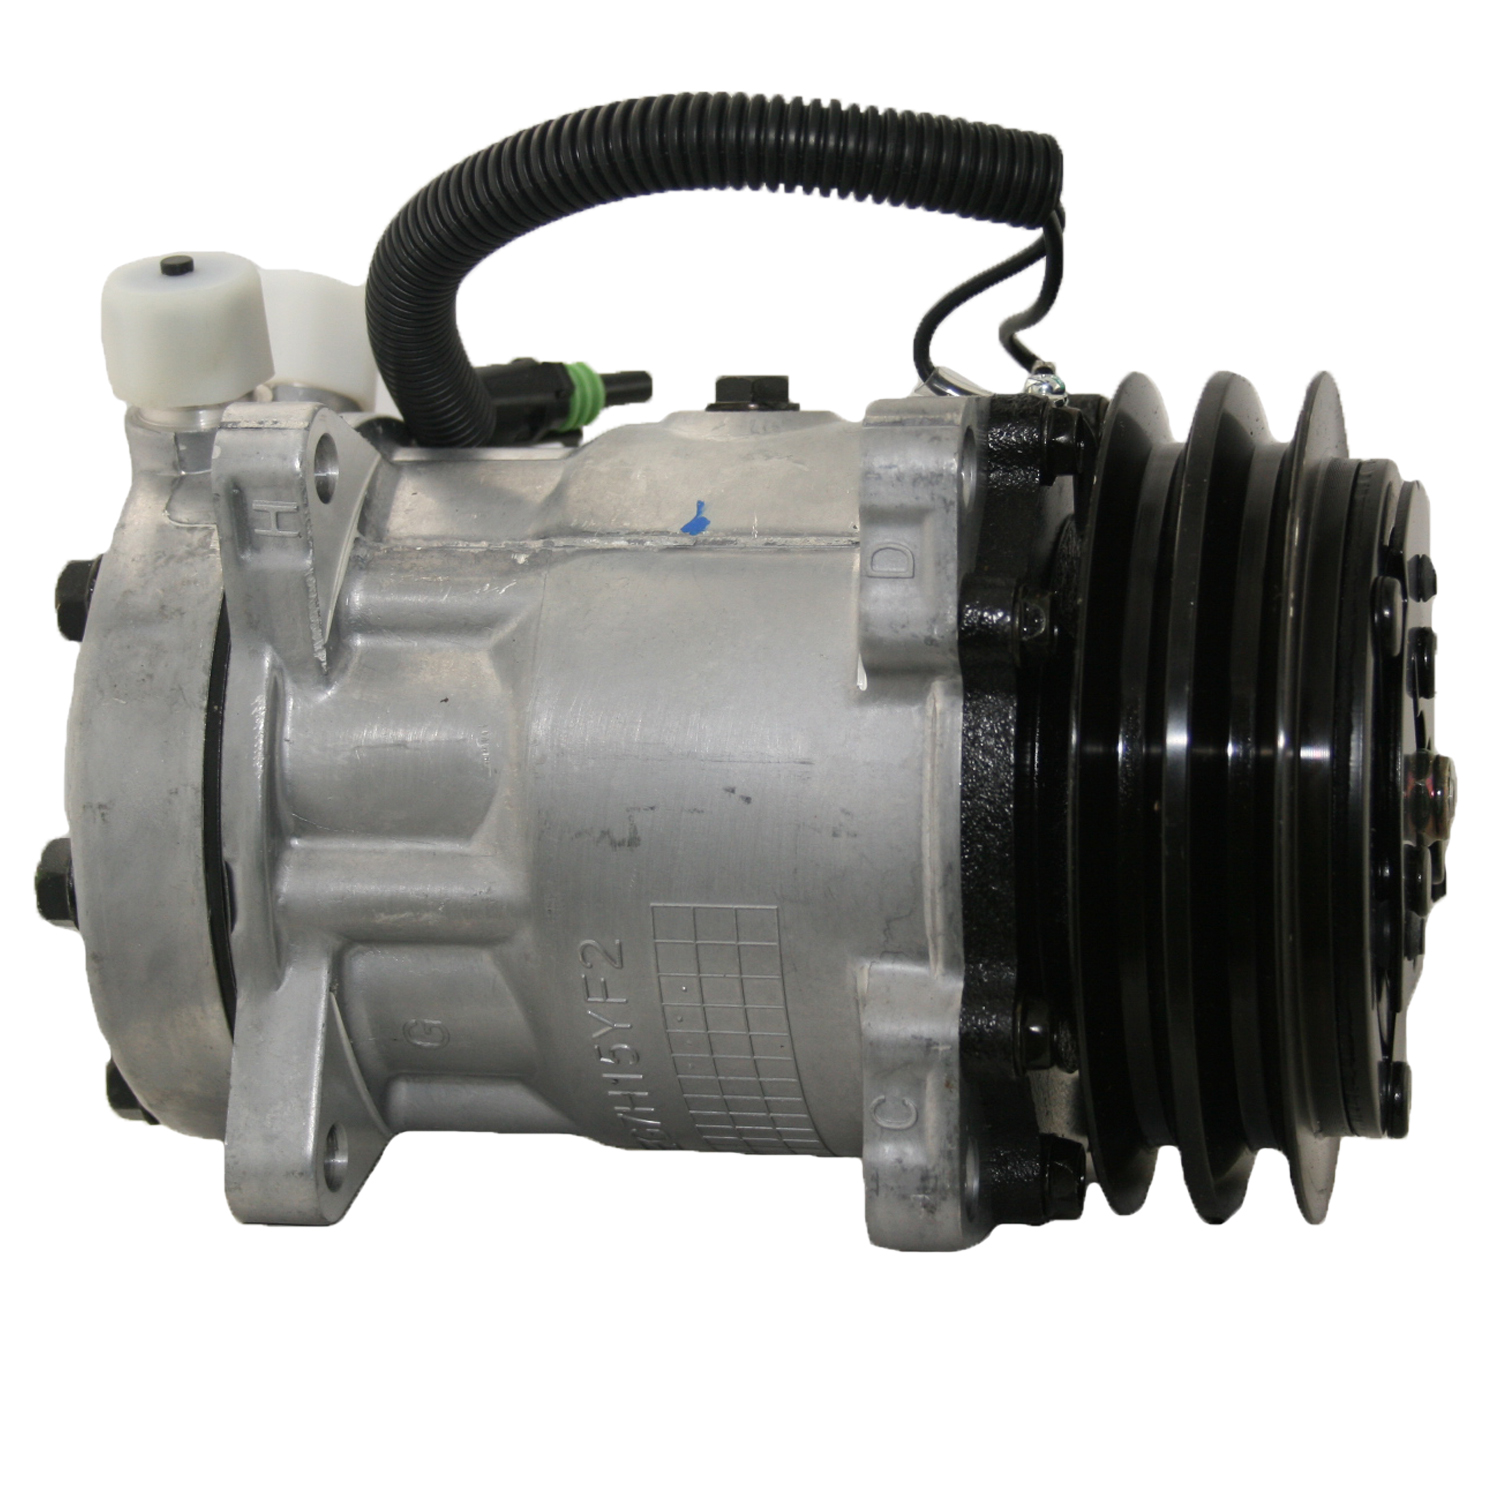 TCW Compressor 40561.201NEW New Product Image field_60b6a13a6e67c